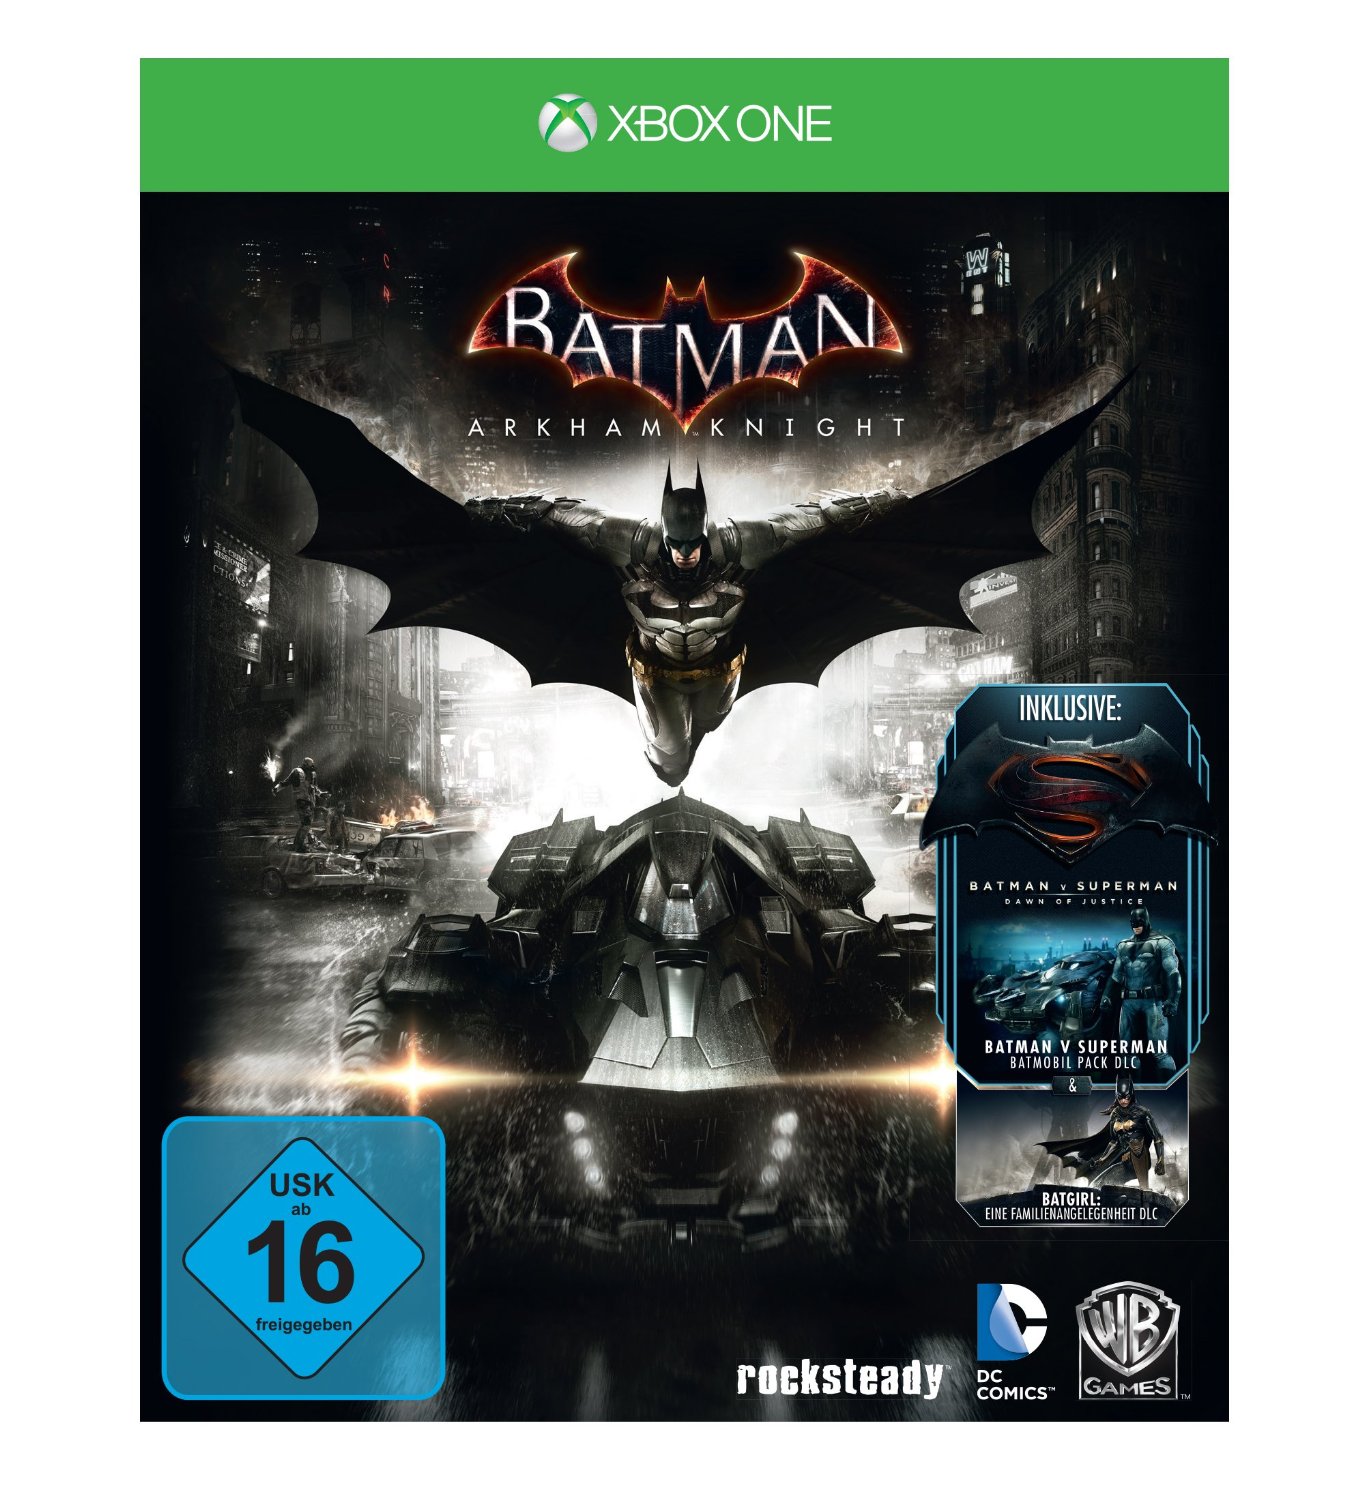 Batman xbox. Batman: рыцарь Аркхема (Premium Edition) Xbox. Диск Бэтмен Аркхем кнайт Xbox 360. Batman Arkham Knight Икс бокс 360. Batman™: рыцарь Аркхема Xbox обложка.